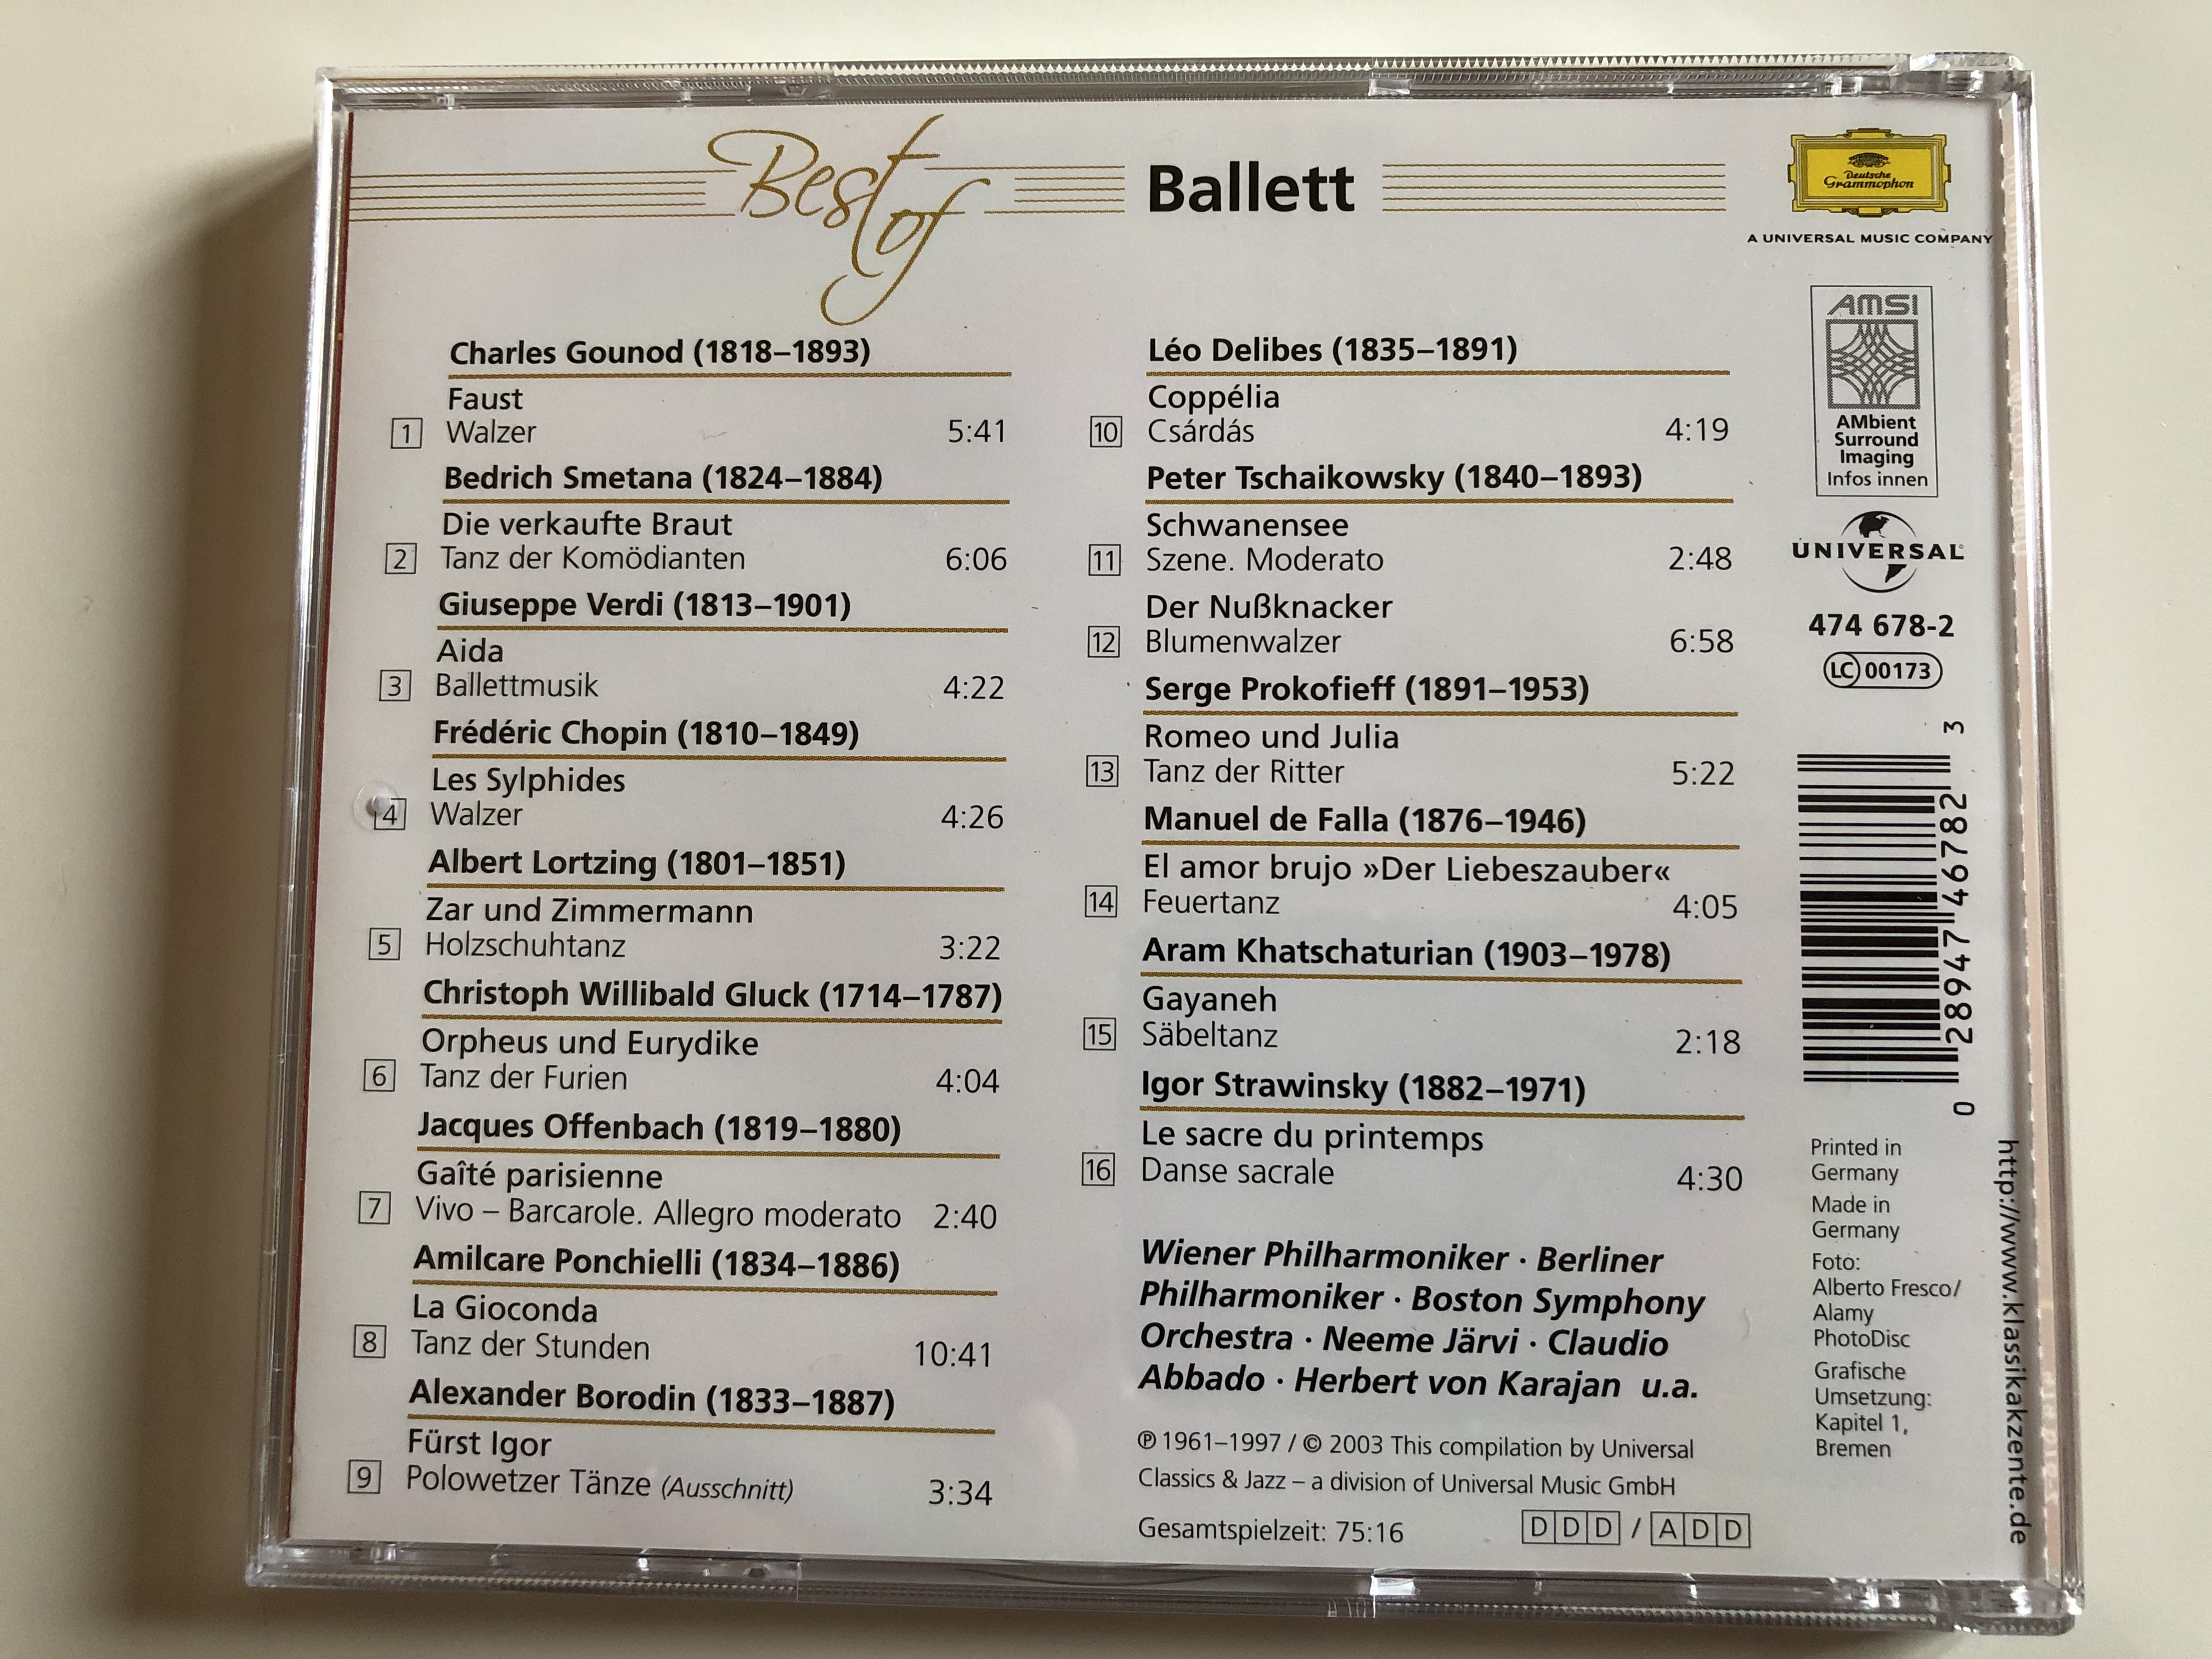 best-of-ballett-berliner-philharmoniker-london-symphony-orchestra-wiener-philharmoniker-claudio-abbado-herbert-von-karajan-james-levine-seiji-ozawa-deutsche-grammophon-audio-cd-474-67-6-.jpg